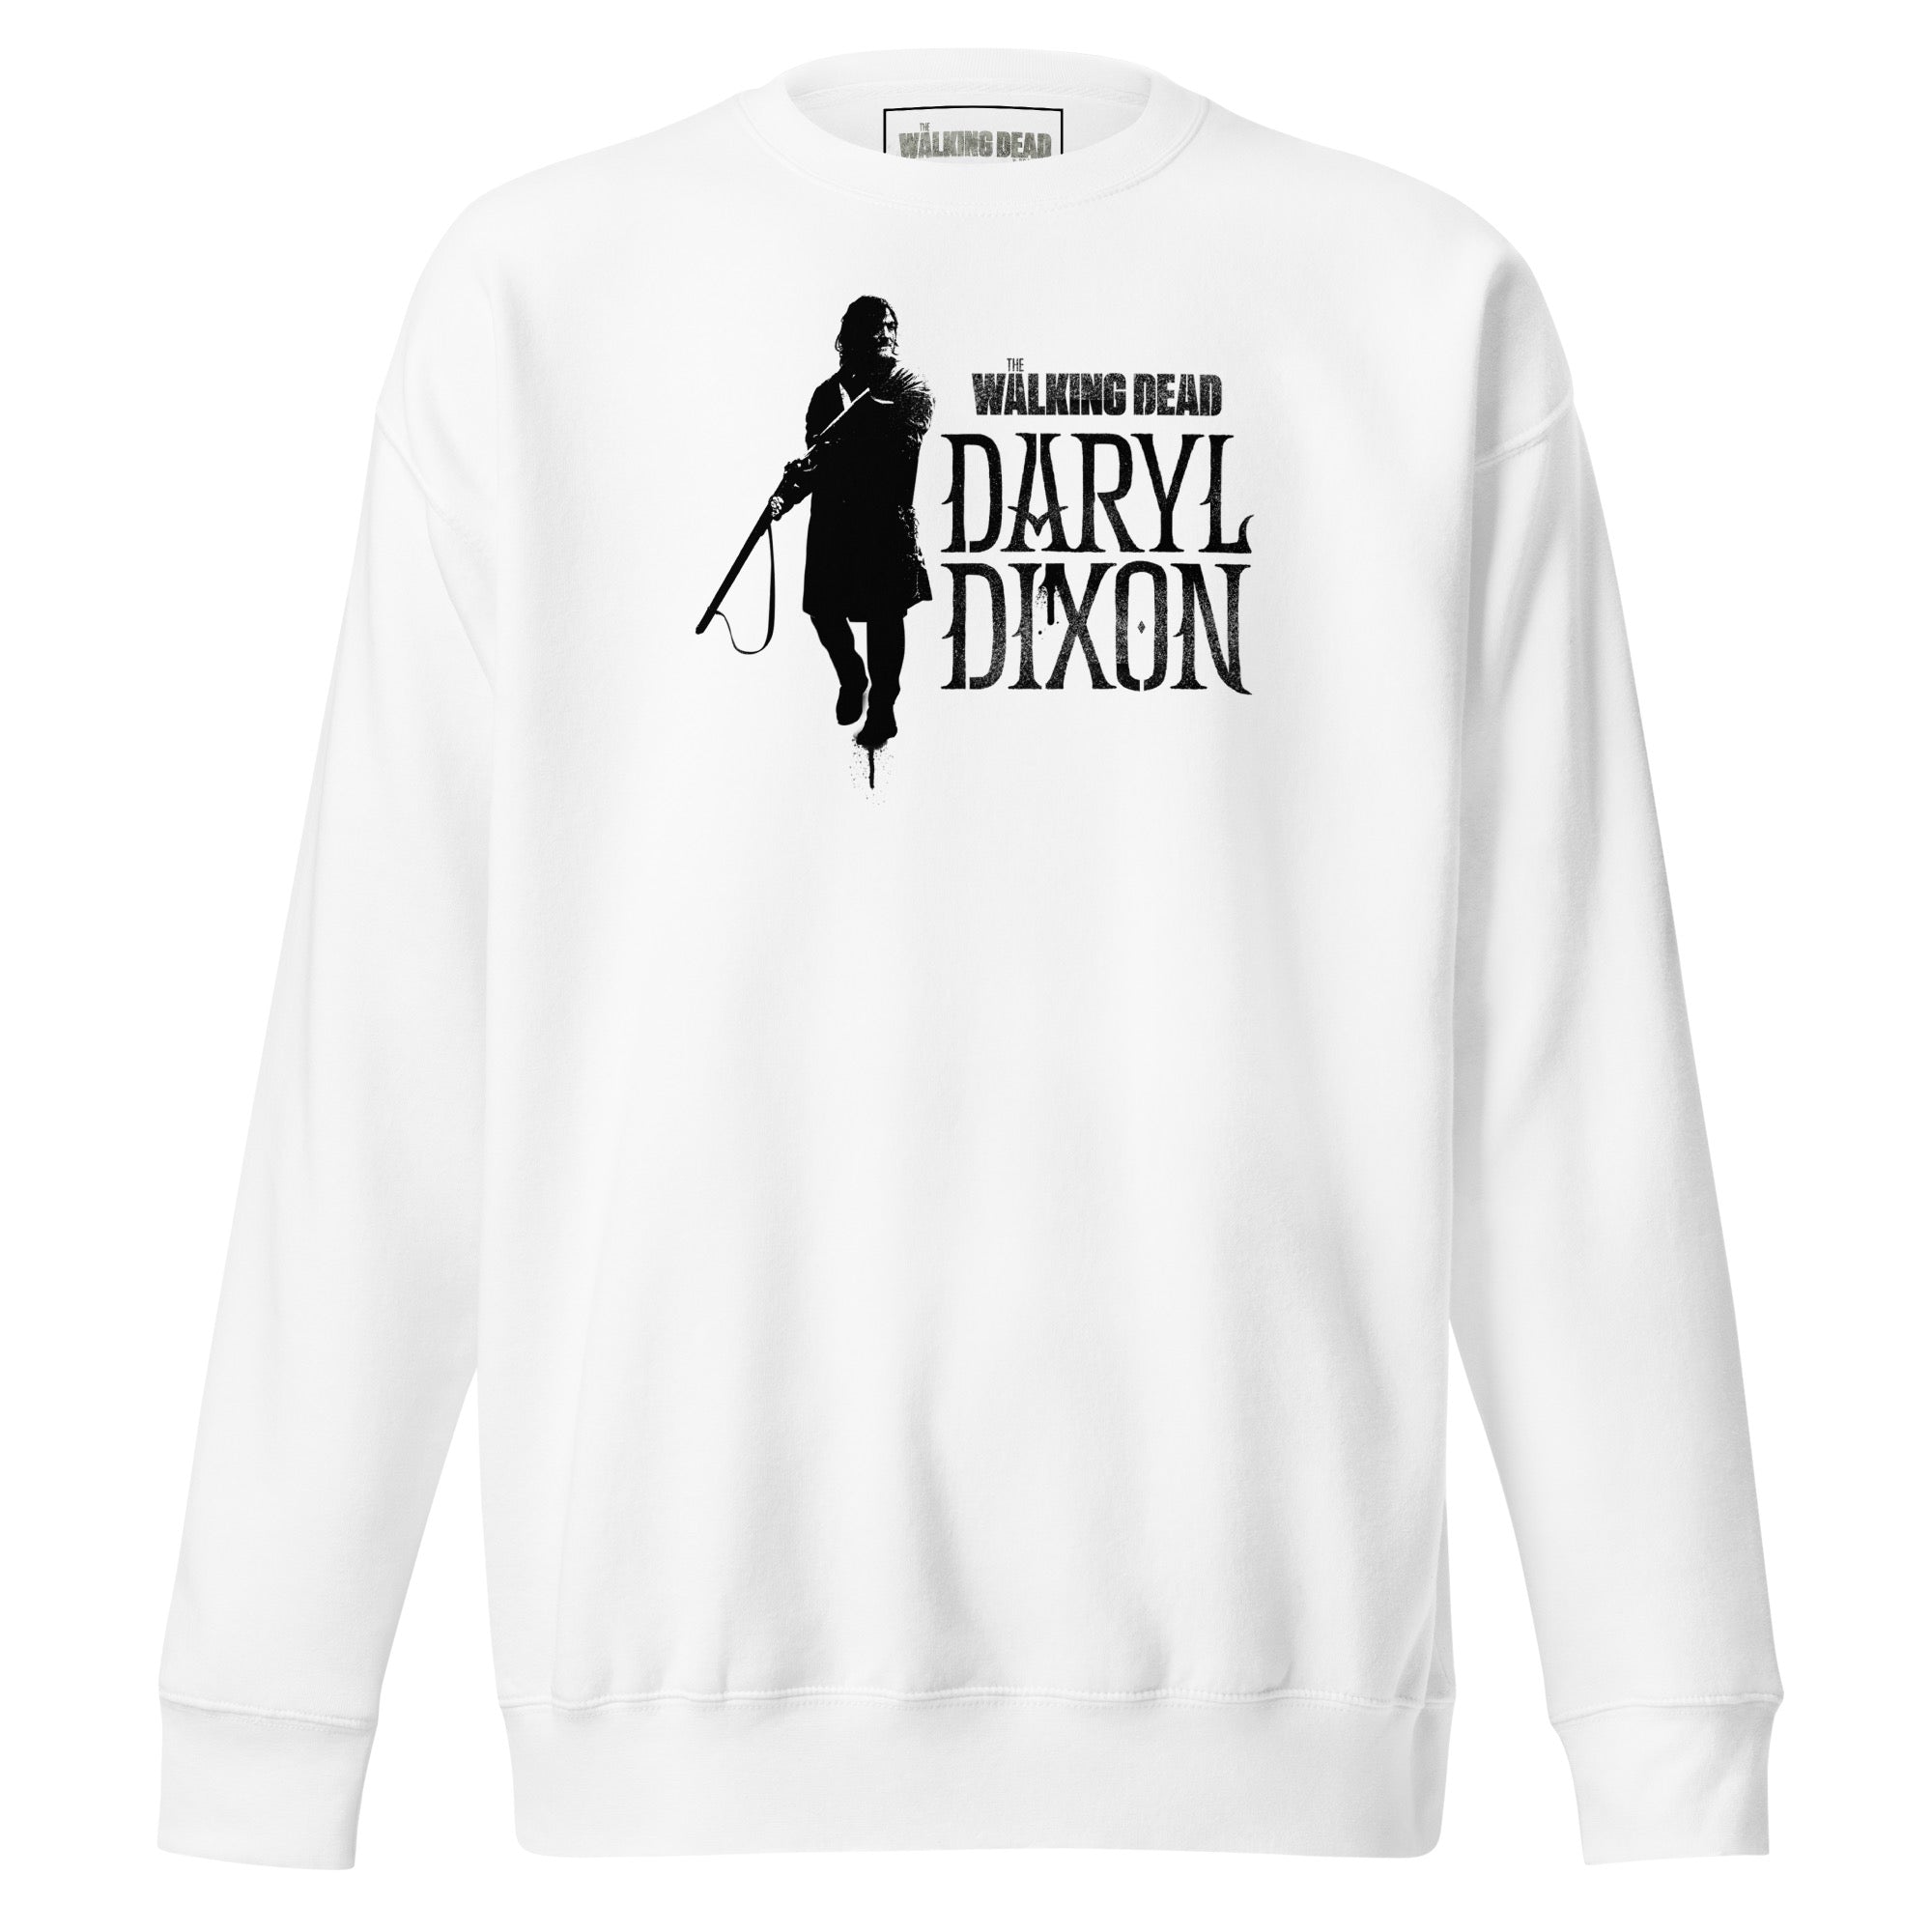 Watch The Walking Dead Daryl Dixon Season Episode 1 Online Amc 0798